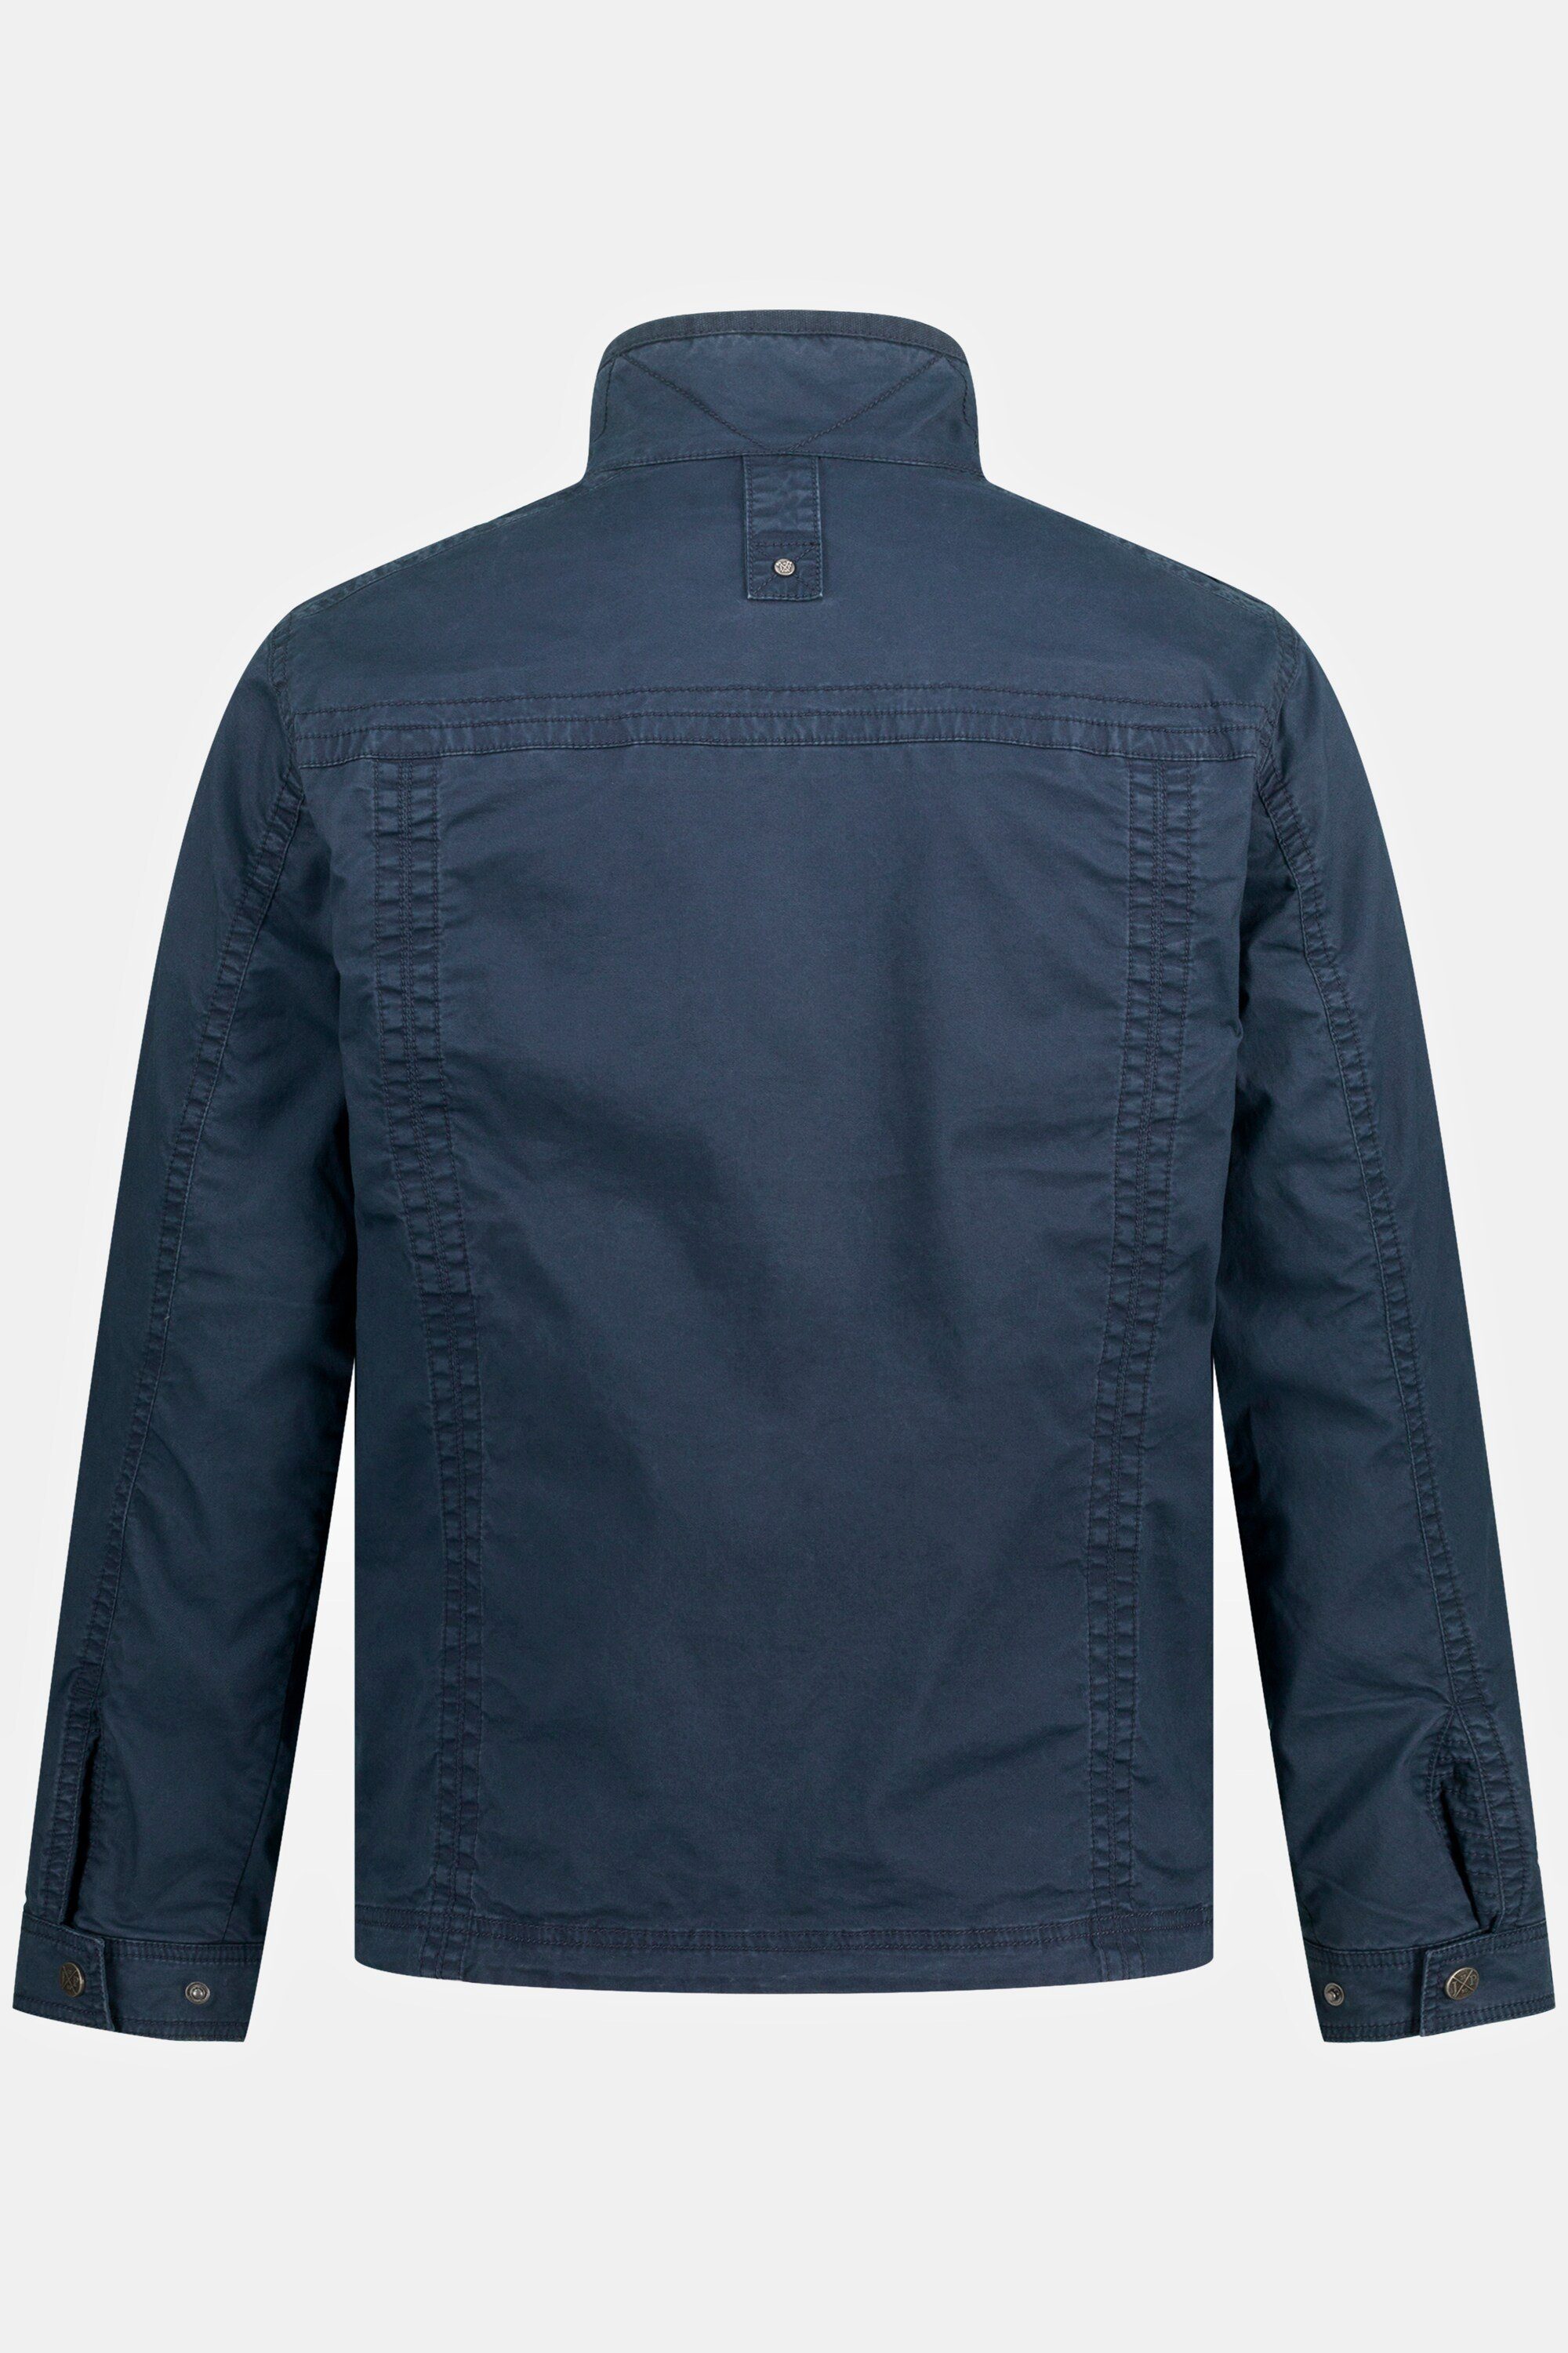 mattes JP1880 Funktionsjacke nachtblau kernige Qualität Baumwolljacke